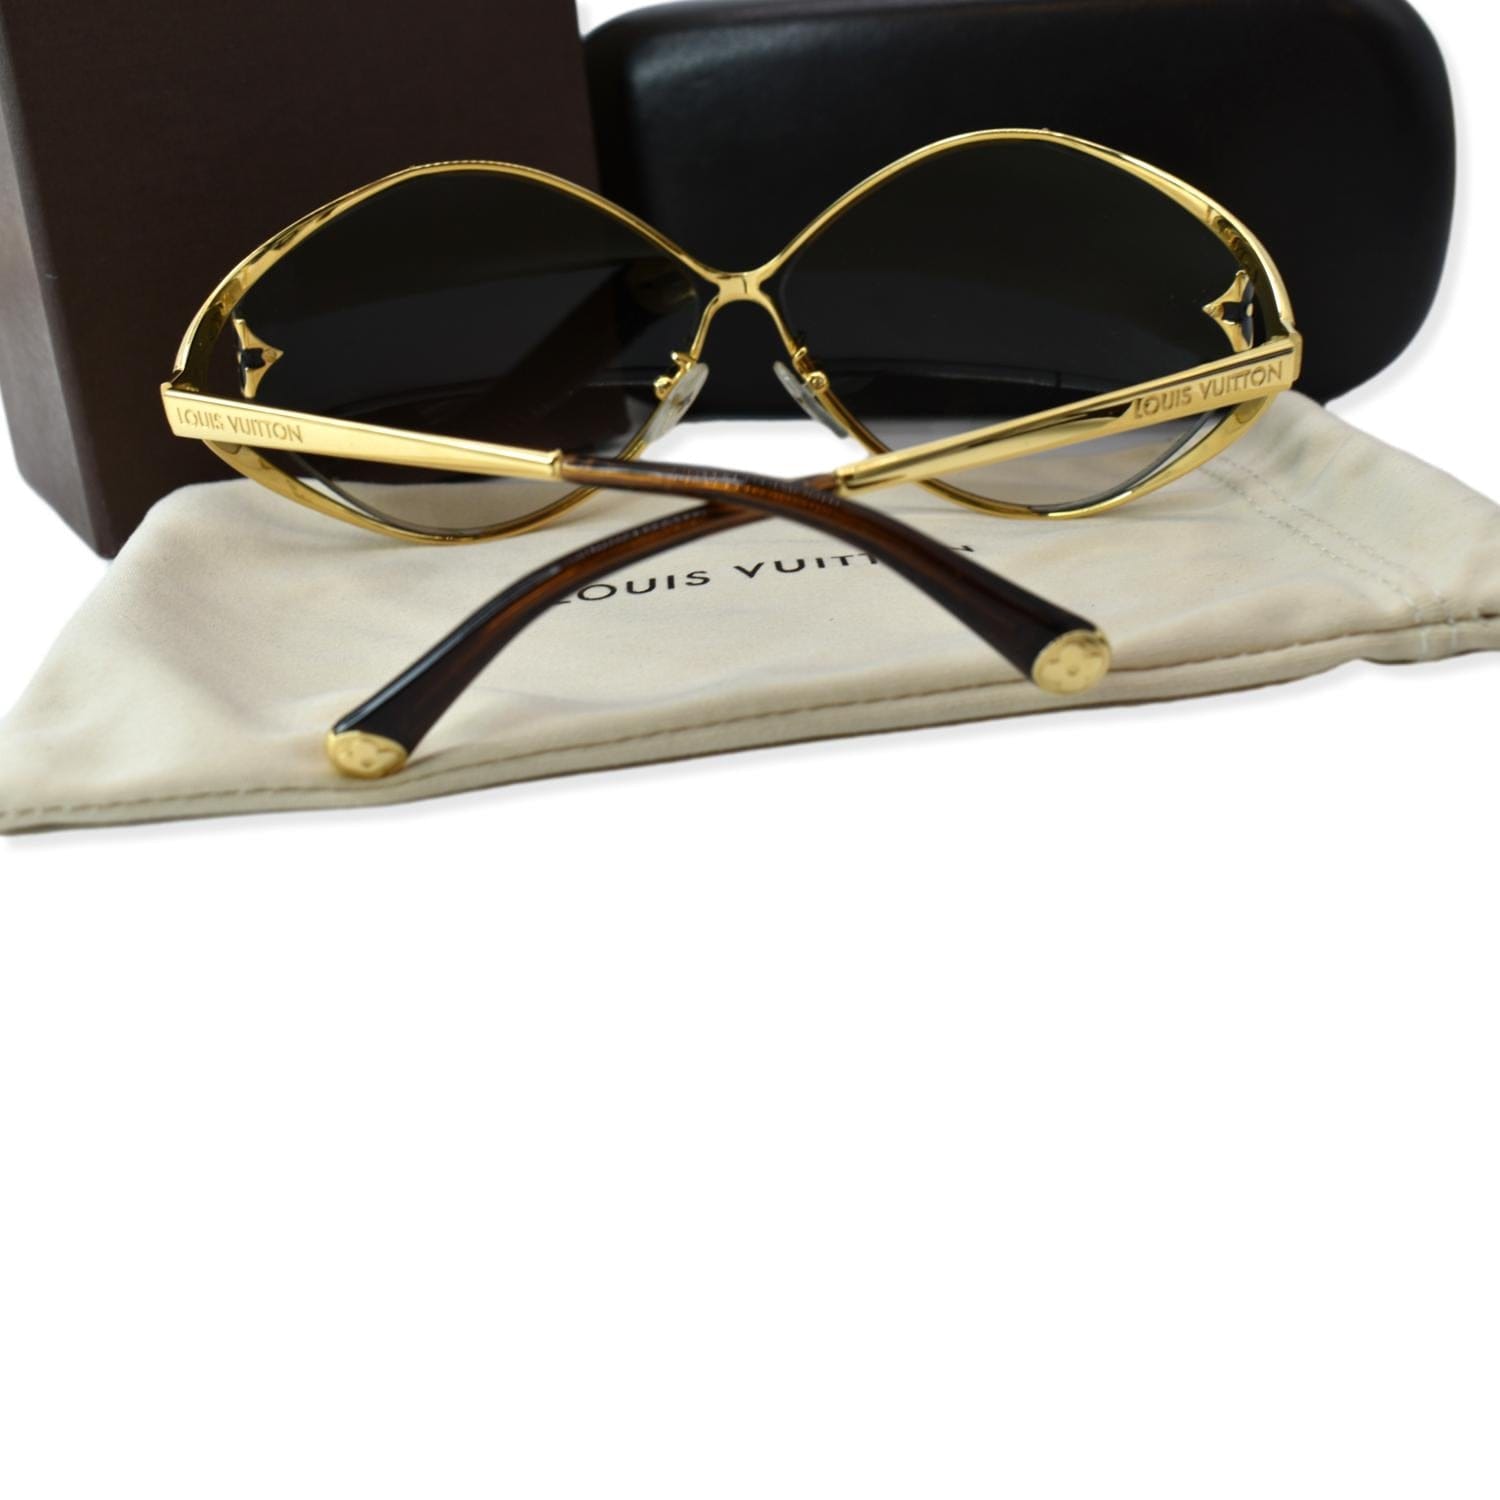 Louis Vuitton sunglasses Z0704U collection valuables high brand popular